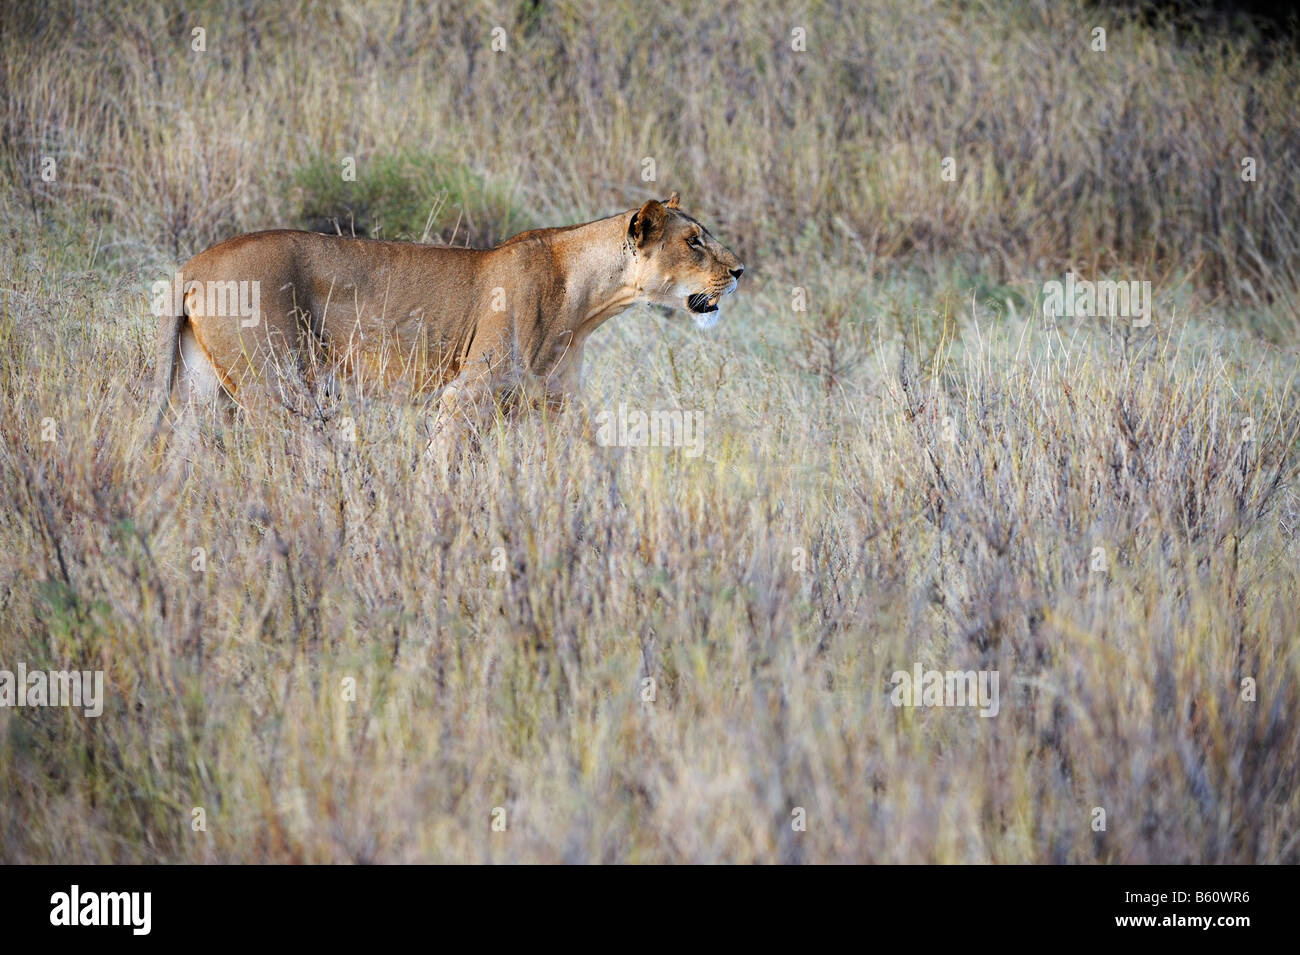 Lion (Panthera leo), Samburu National Reserve, Kenya, Africa Banque D'Images